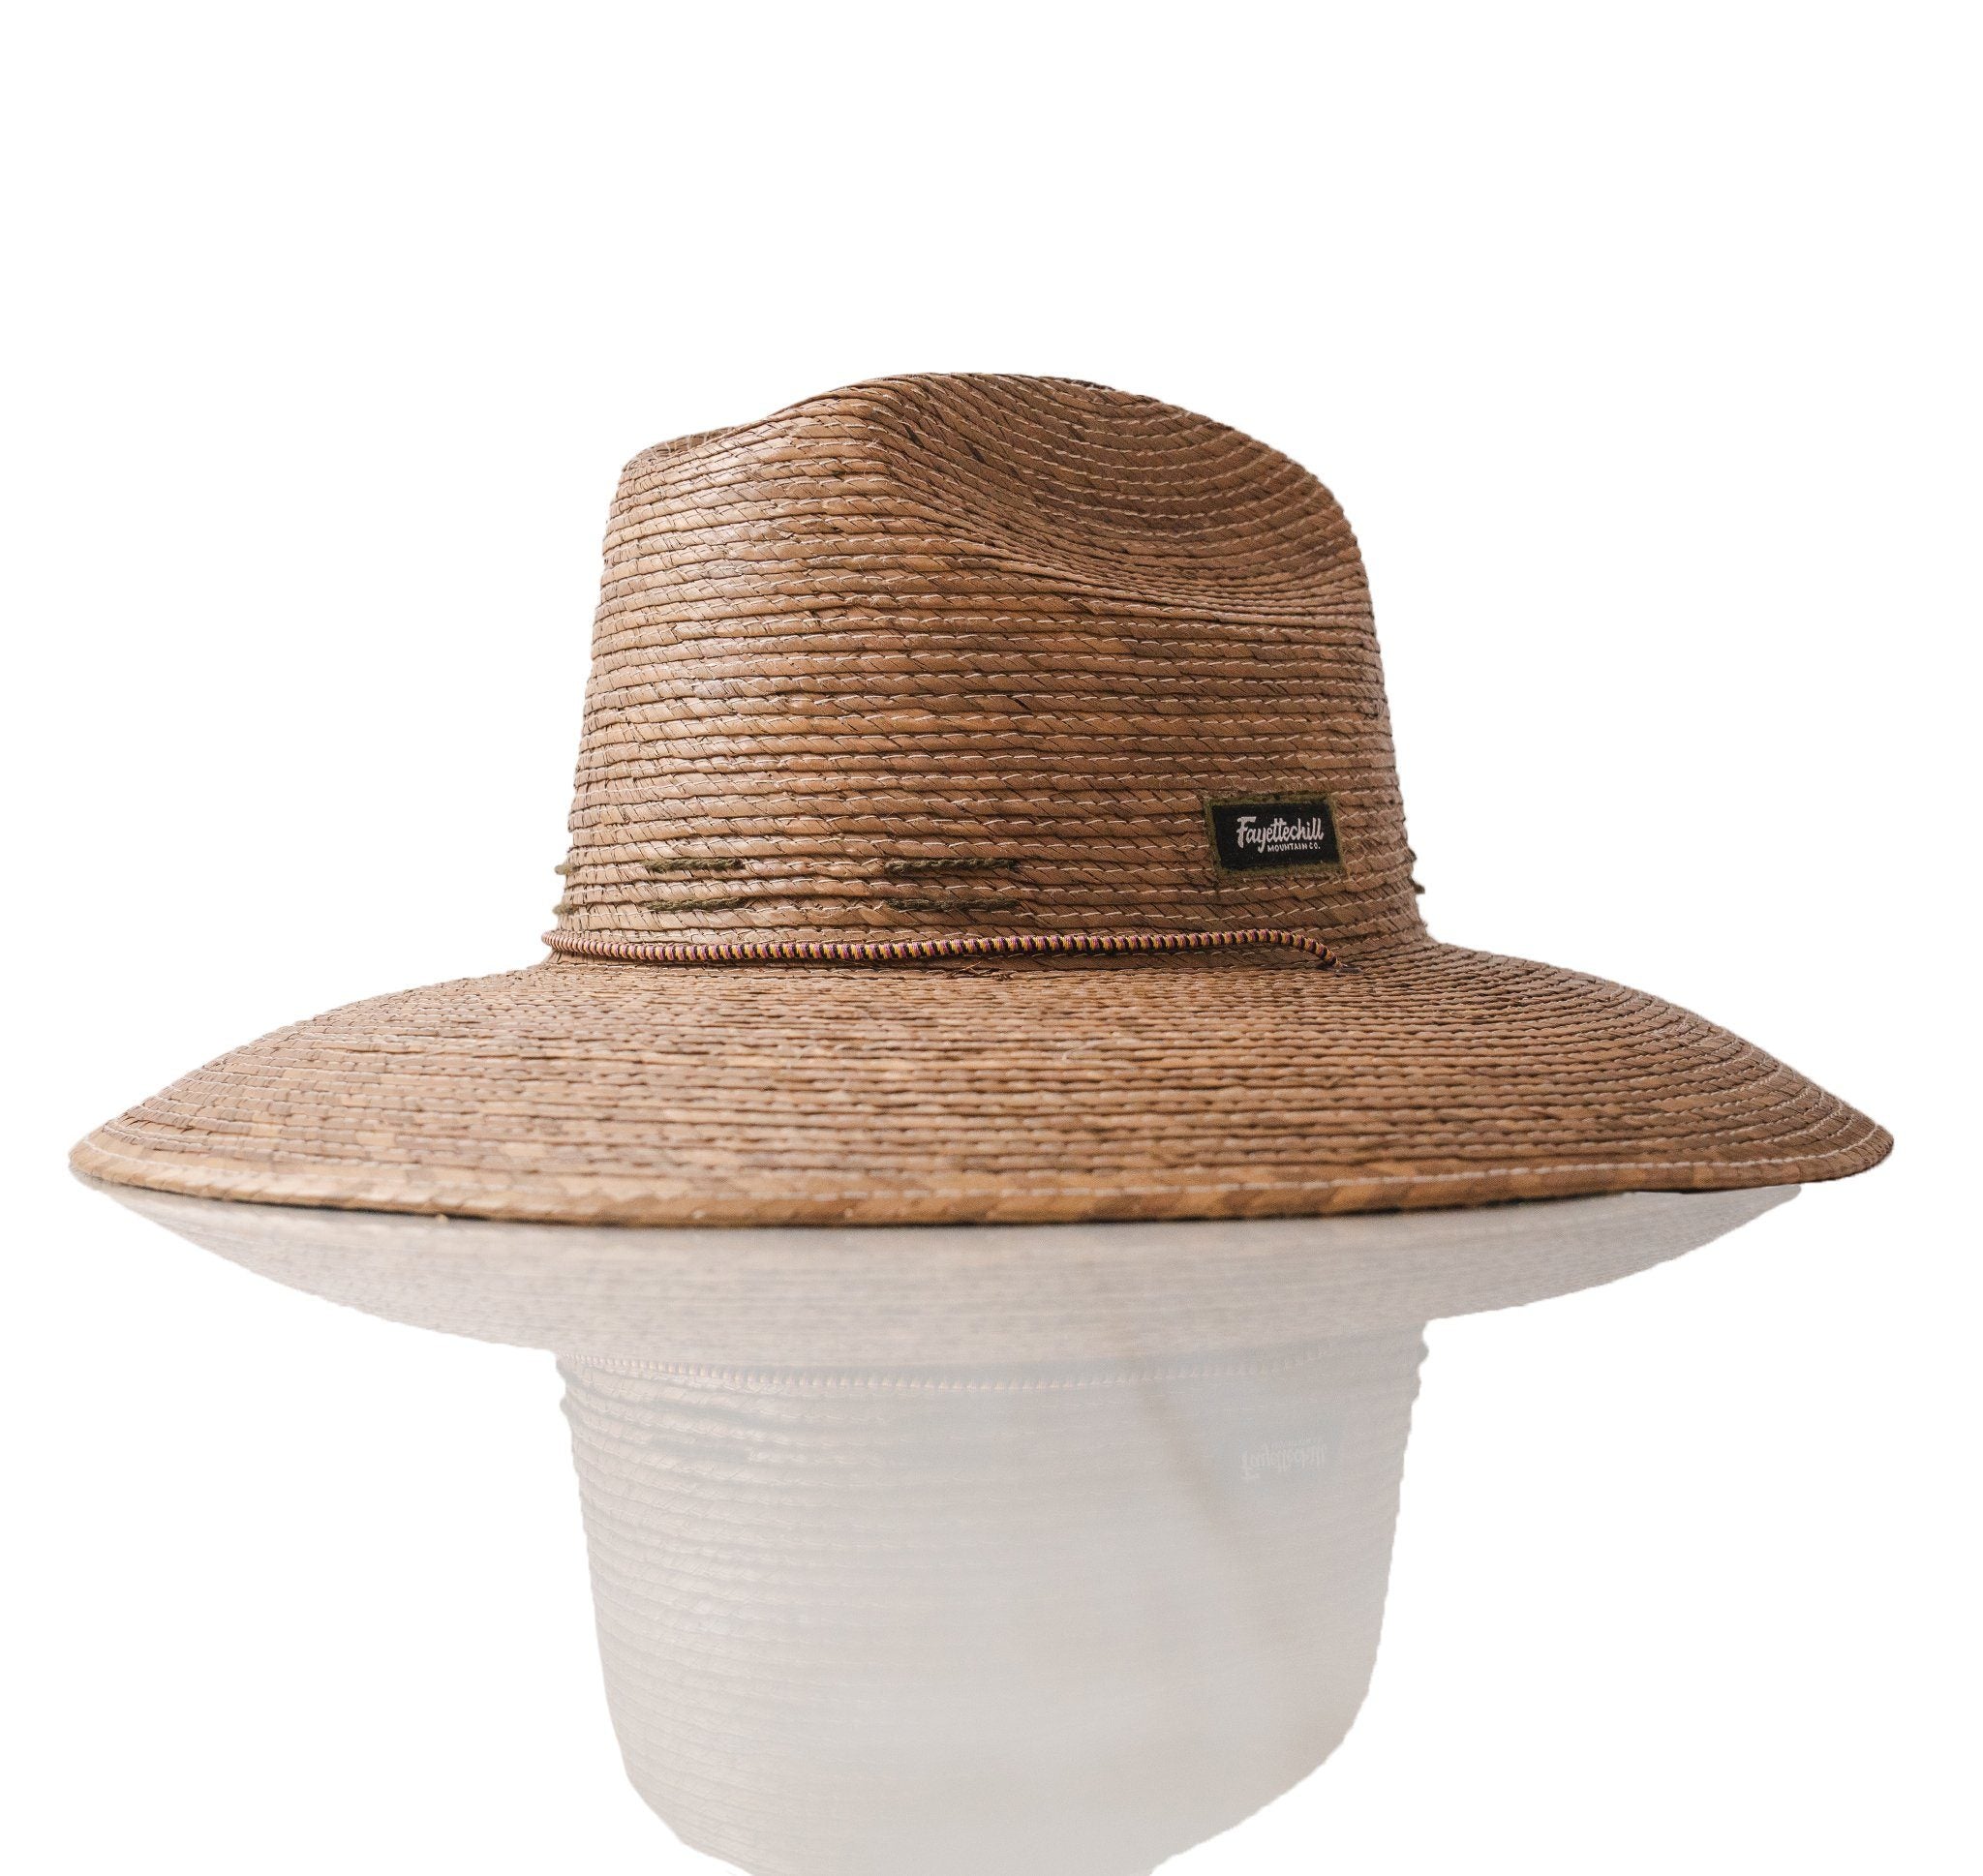 Fayettechill - THE original sunshade hat. The Hoff.    #goodsforthewoods #fayettechill #madeinusa